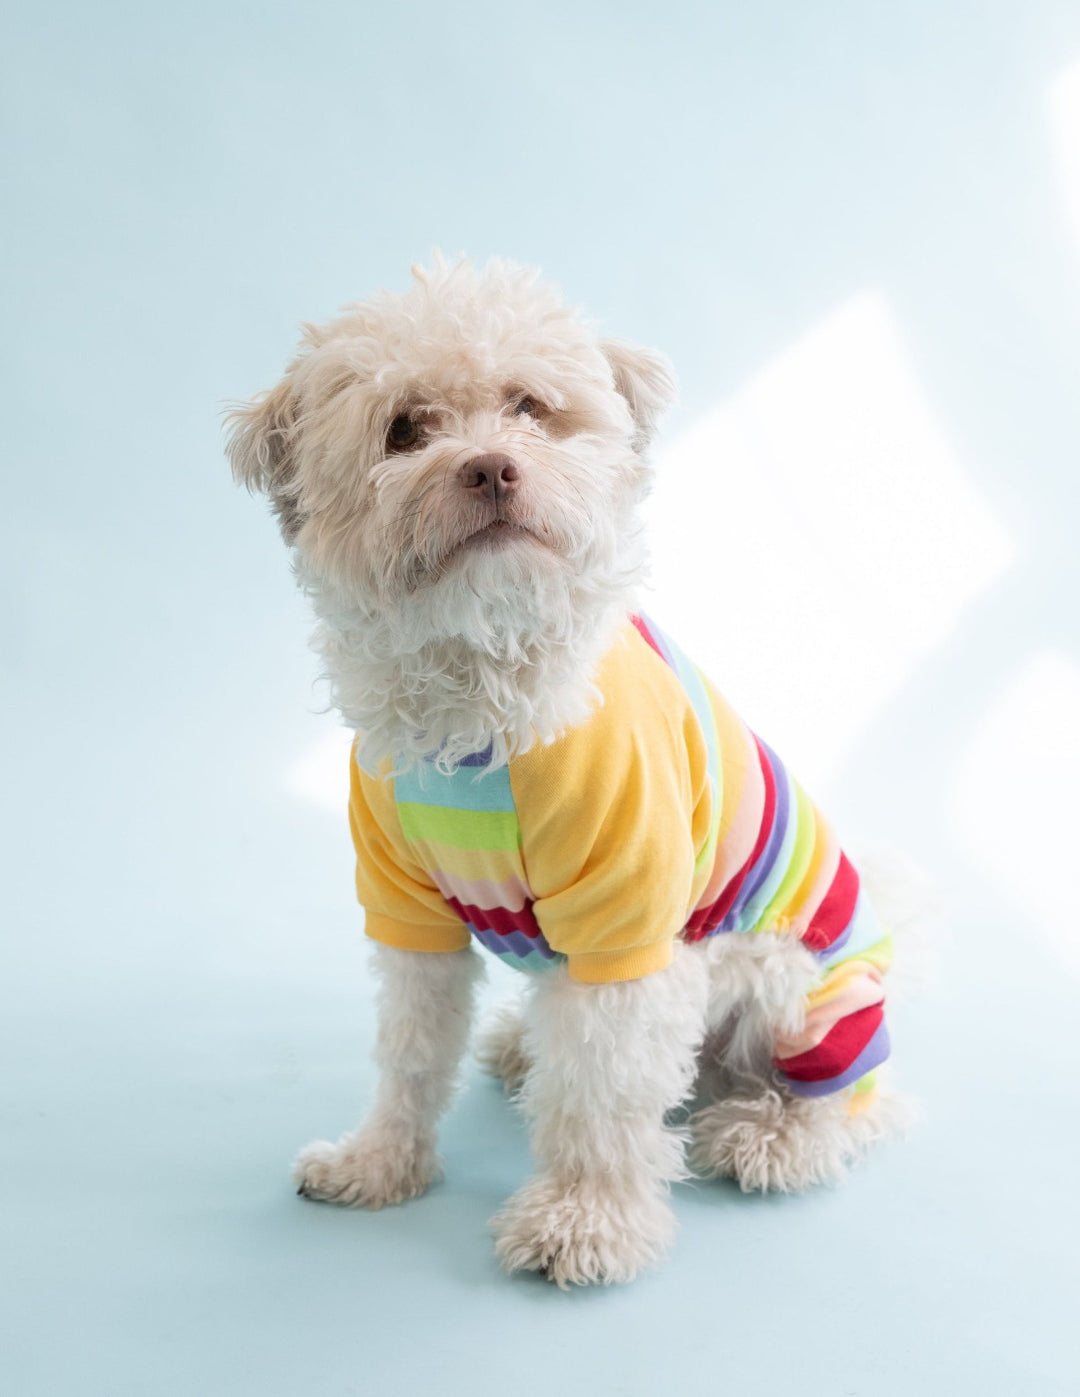 rainbow girl stripes cotton dog pajama